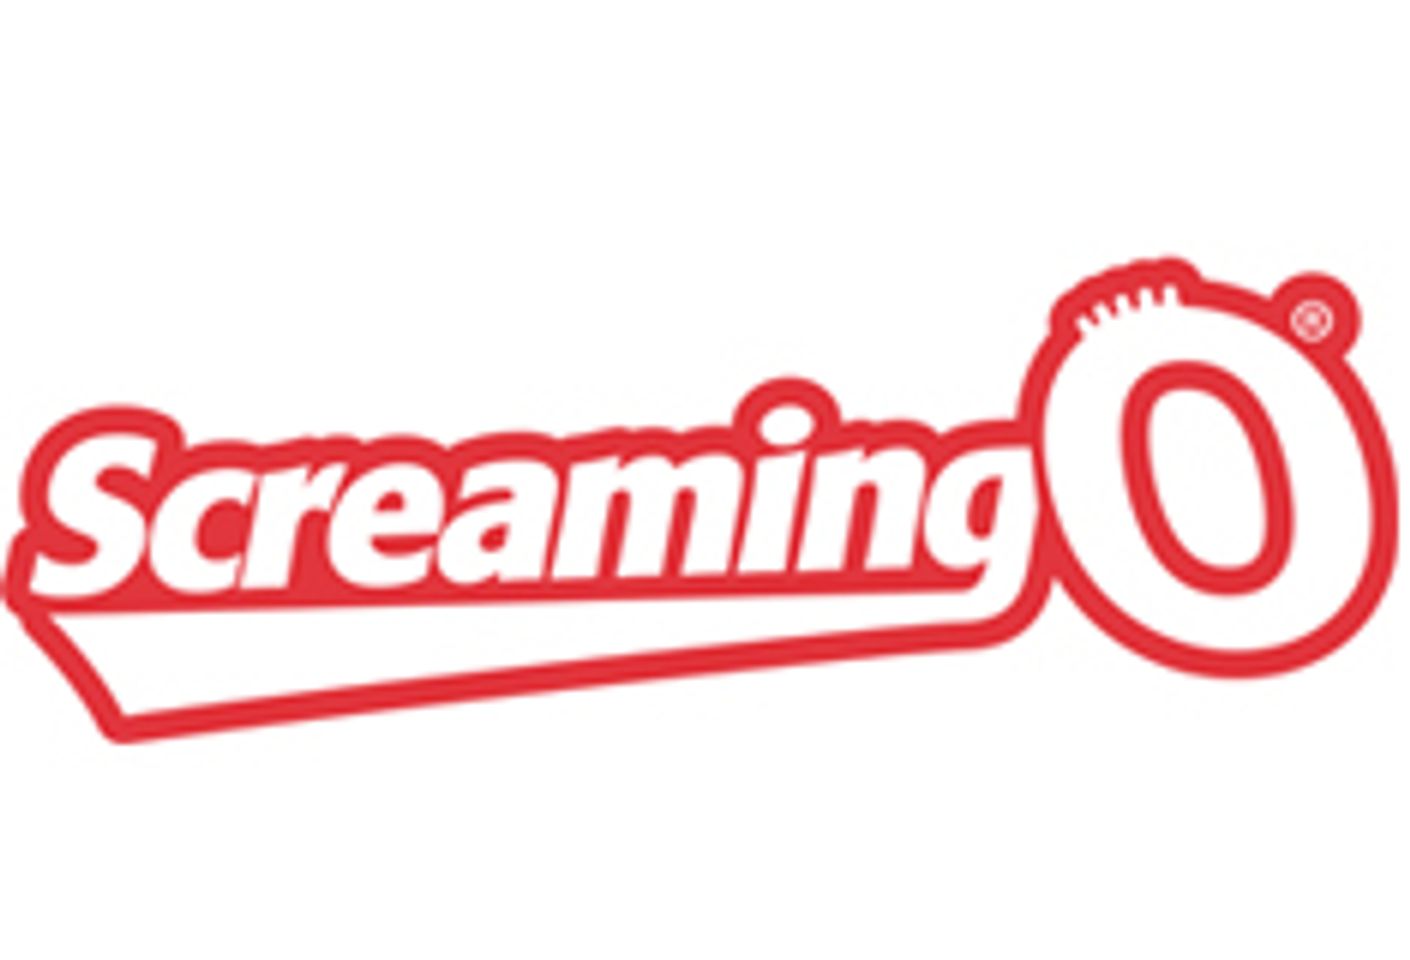 The Screaming O Sponsors ‘Masturbation March’ Program